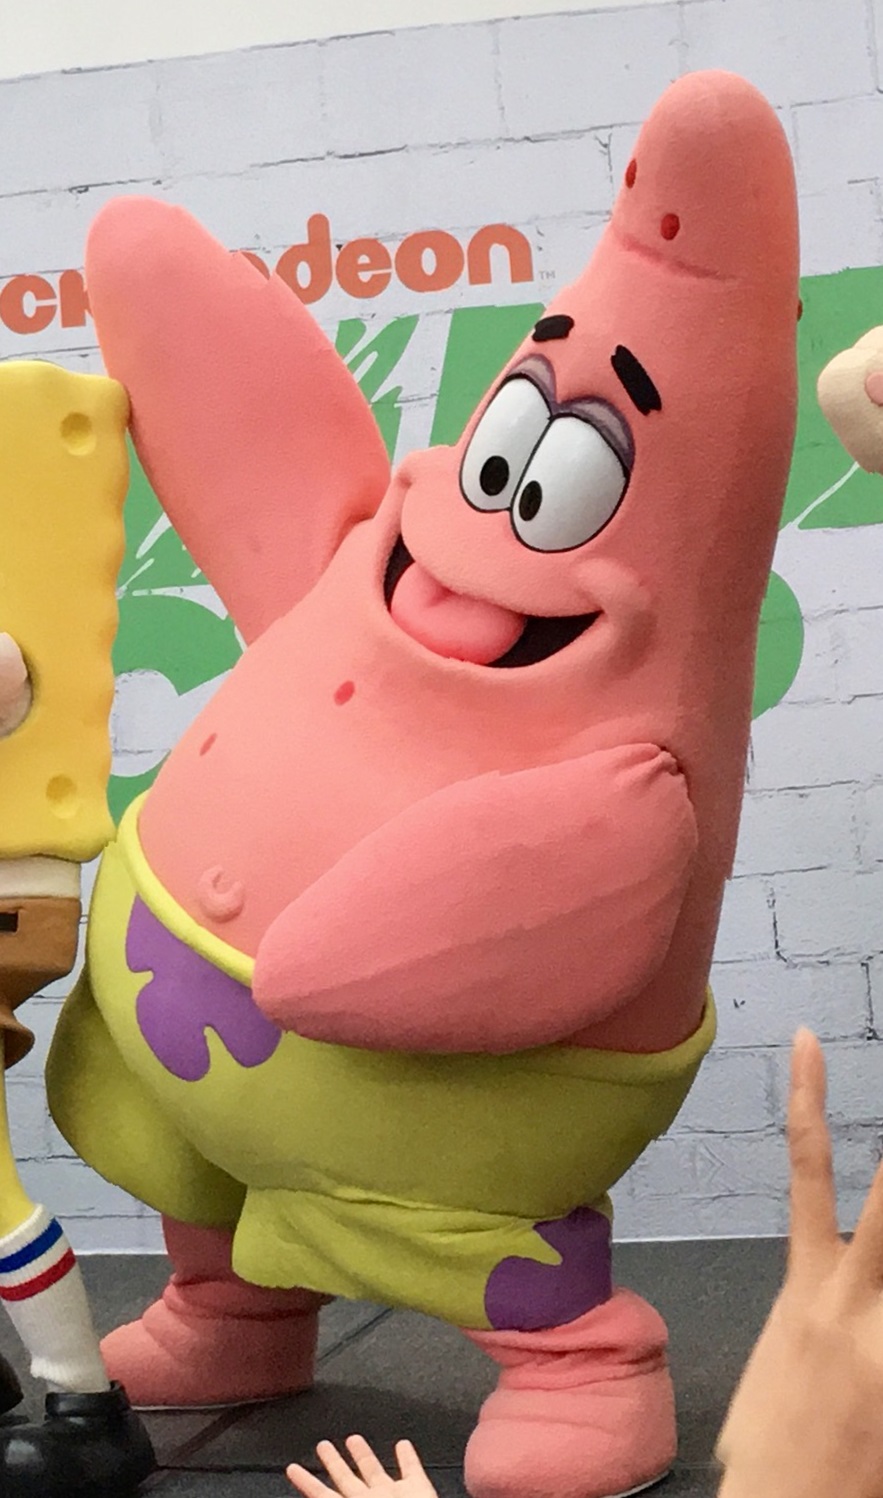 SpongeBob SquarePants: Nickelodeon is developing 'The Patrick Star